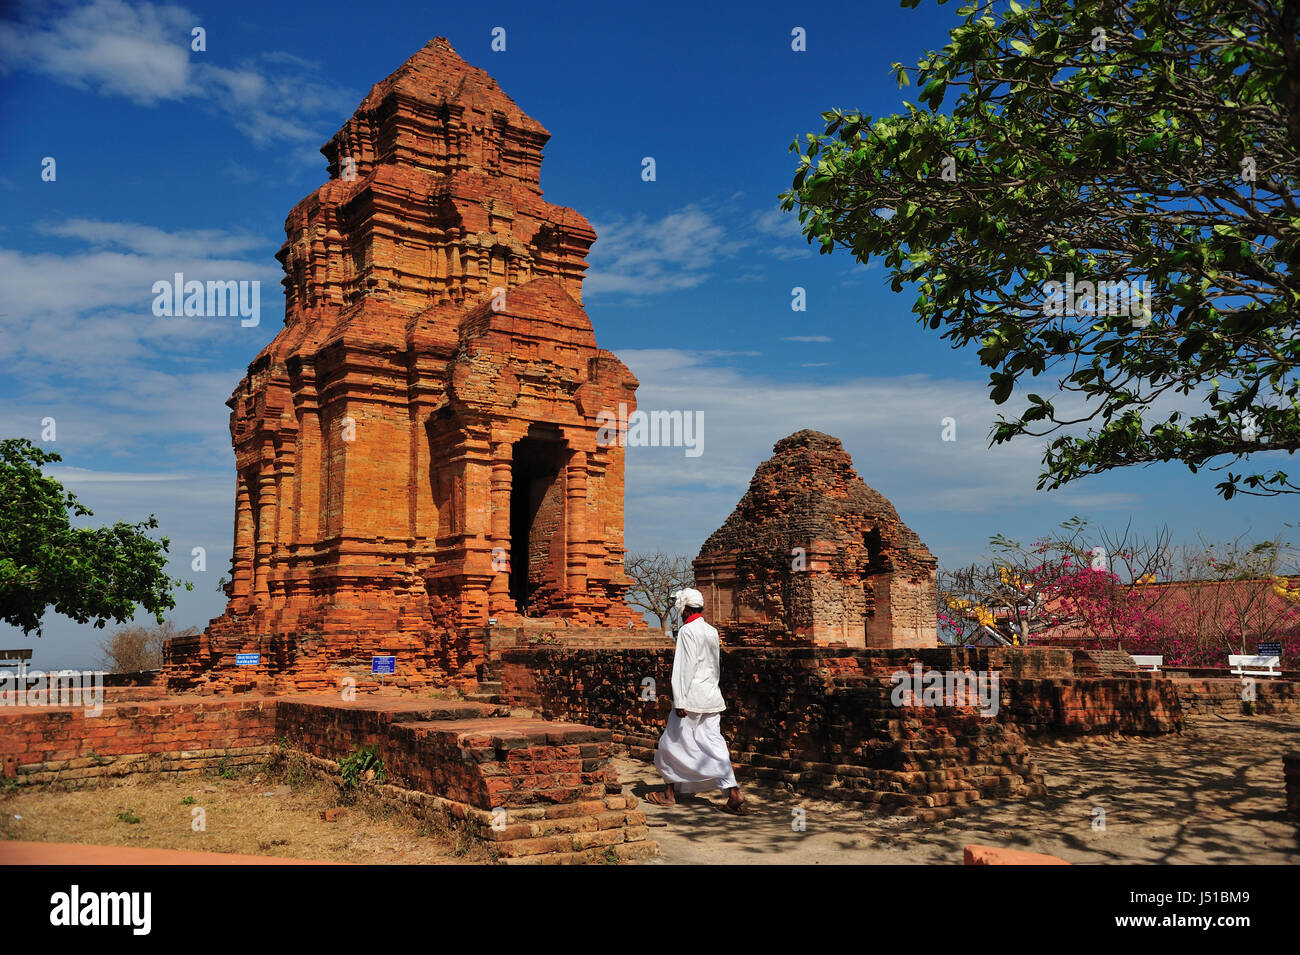 Un hombre con traje tradicional de Cham está caminando en Thap Po Sah Inu, templo del siglo xv torre Cham ruinas de Phan Thiet, provincia de Binh Thuan, Vietnam Foto de stock